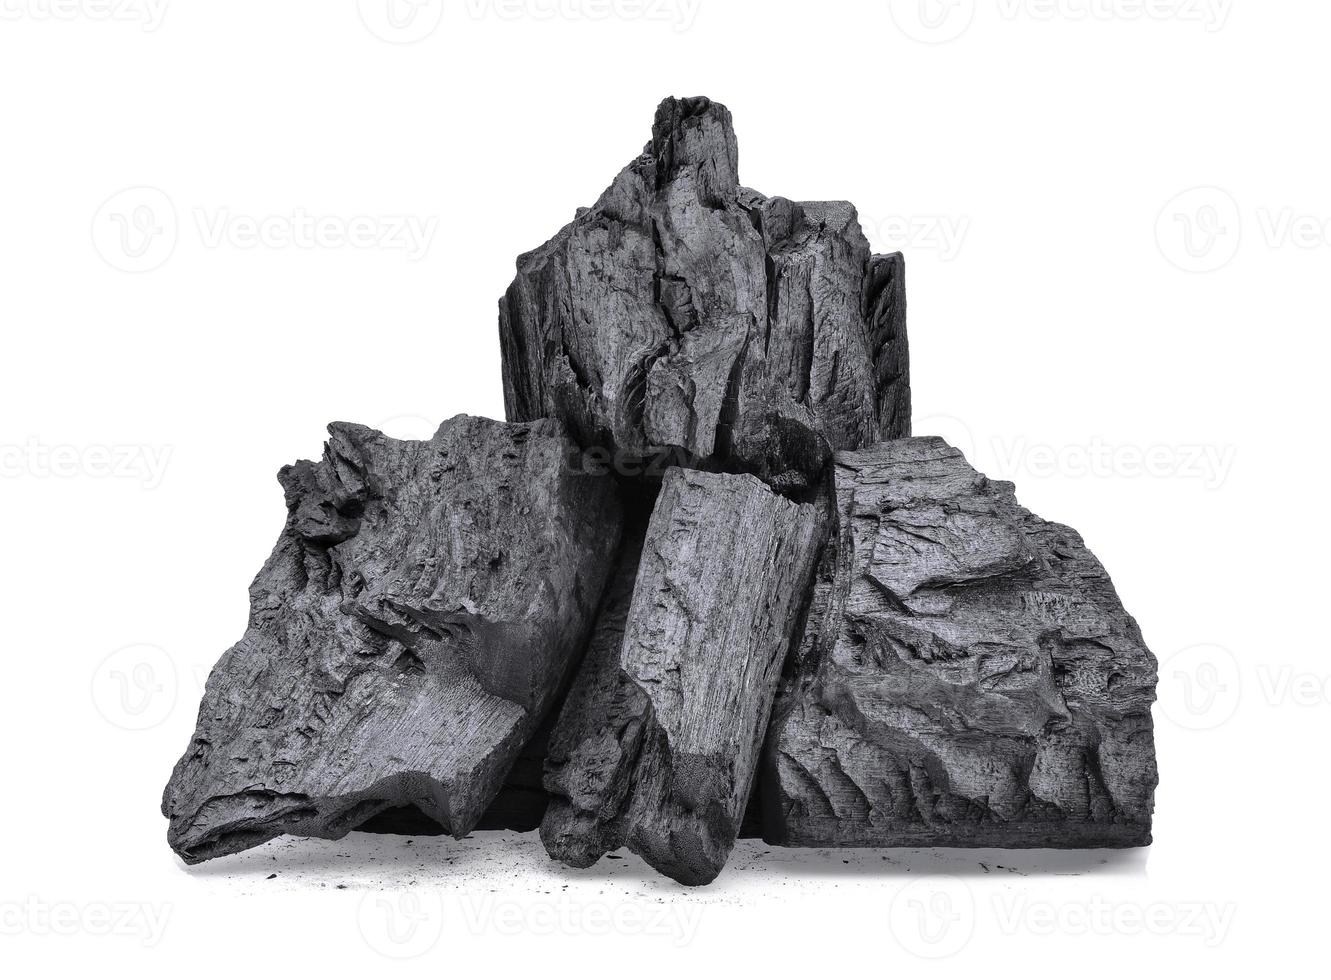 wood charcoal isolated on white background photo